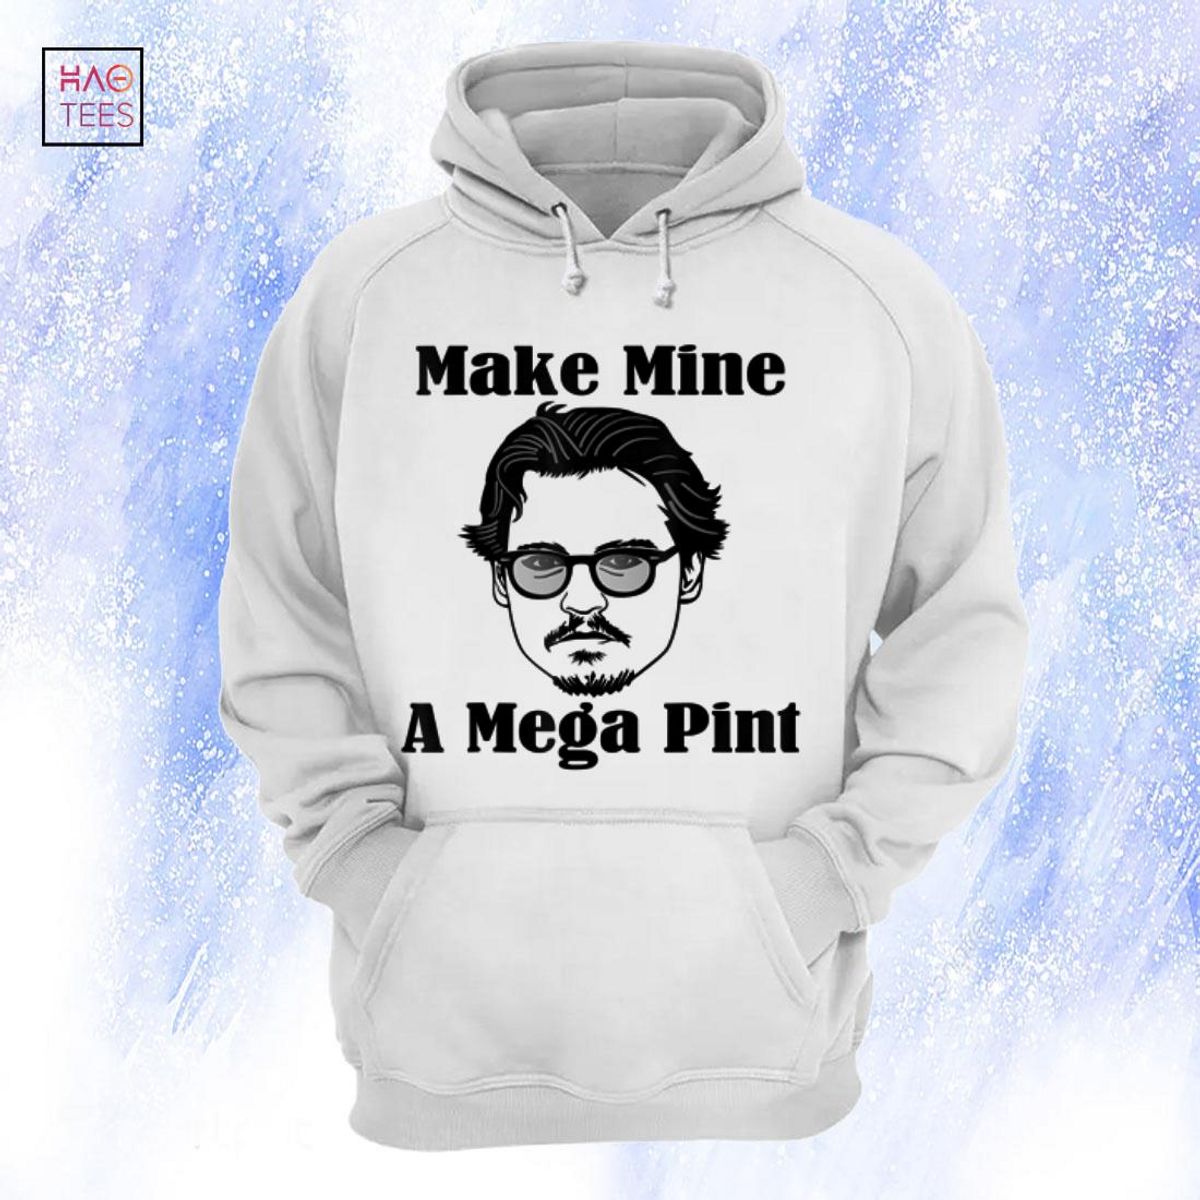 Make mine a mega pint funny Shirt